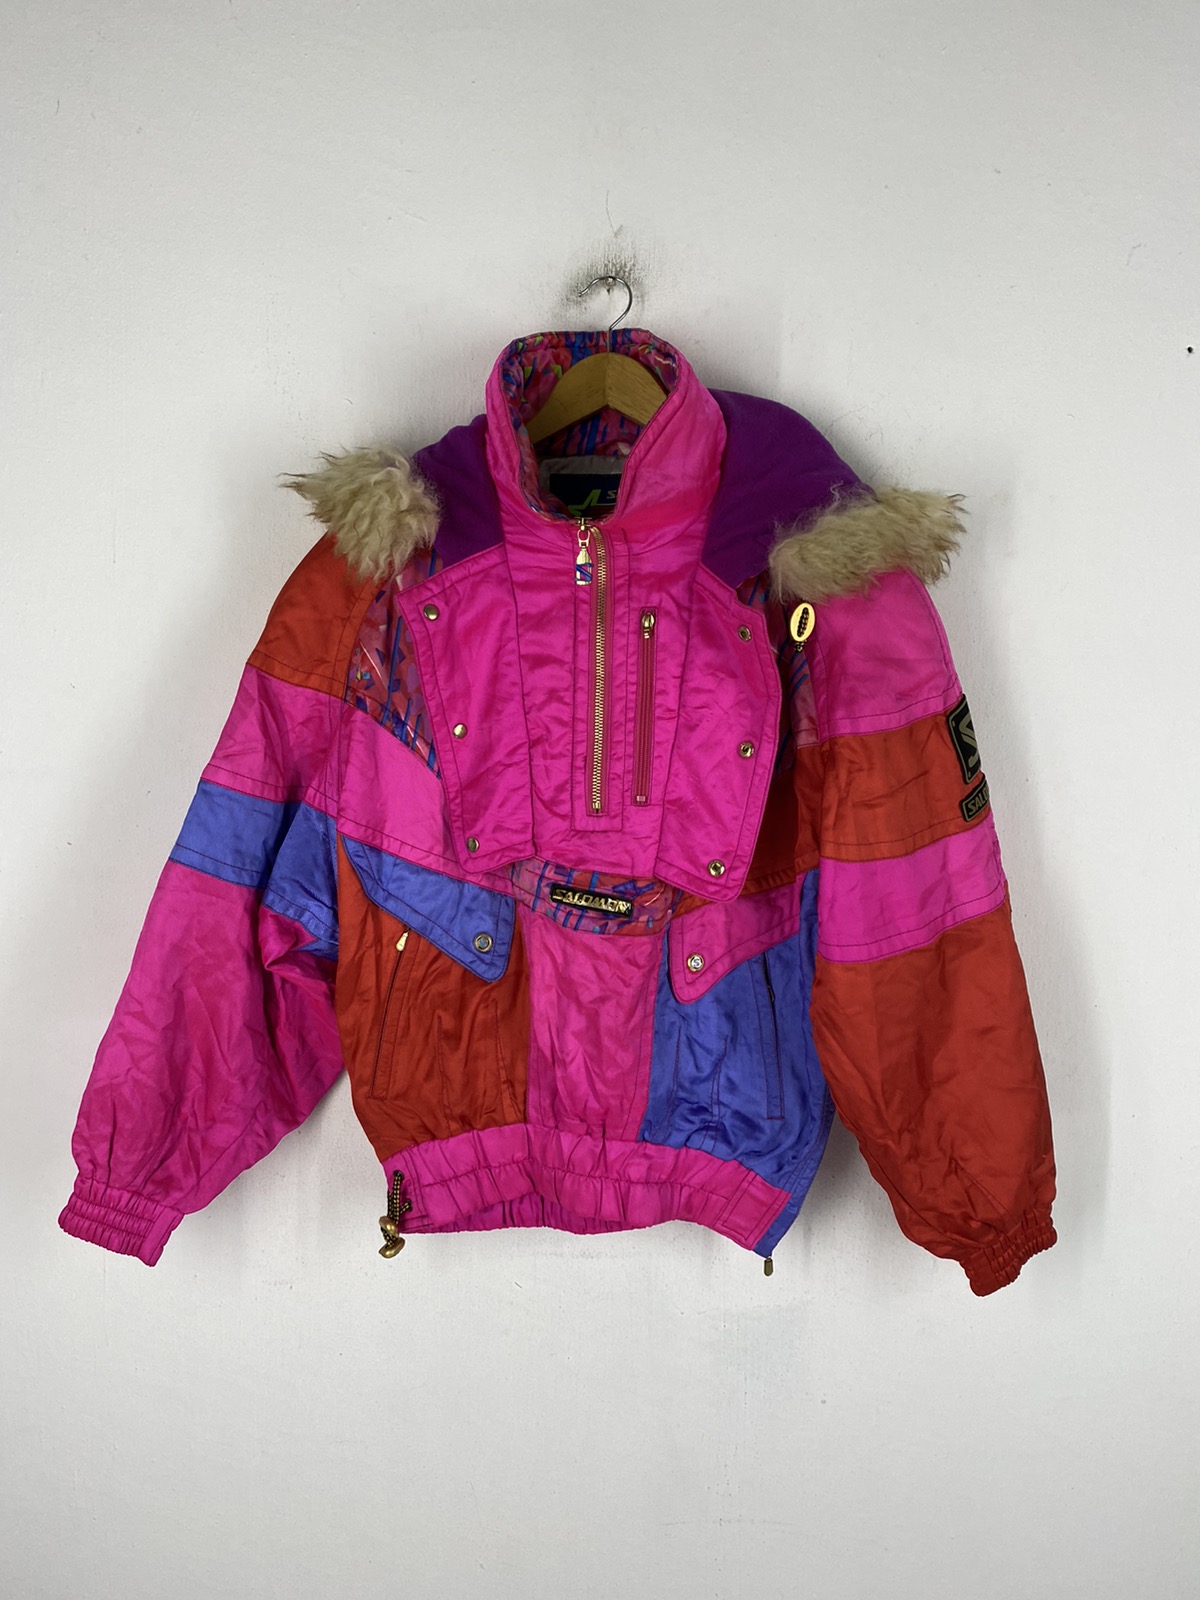 Vintage Arch Solomon Pullover Ski Unisex Jacket - 1